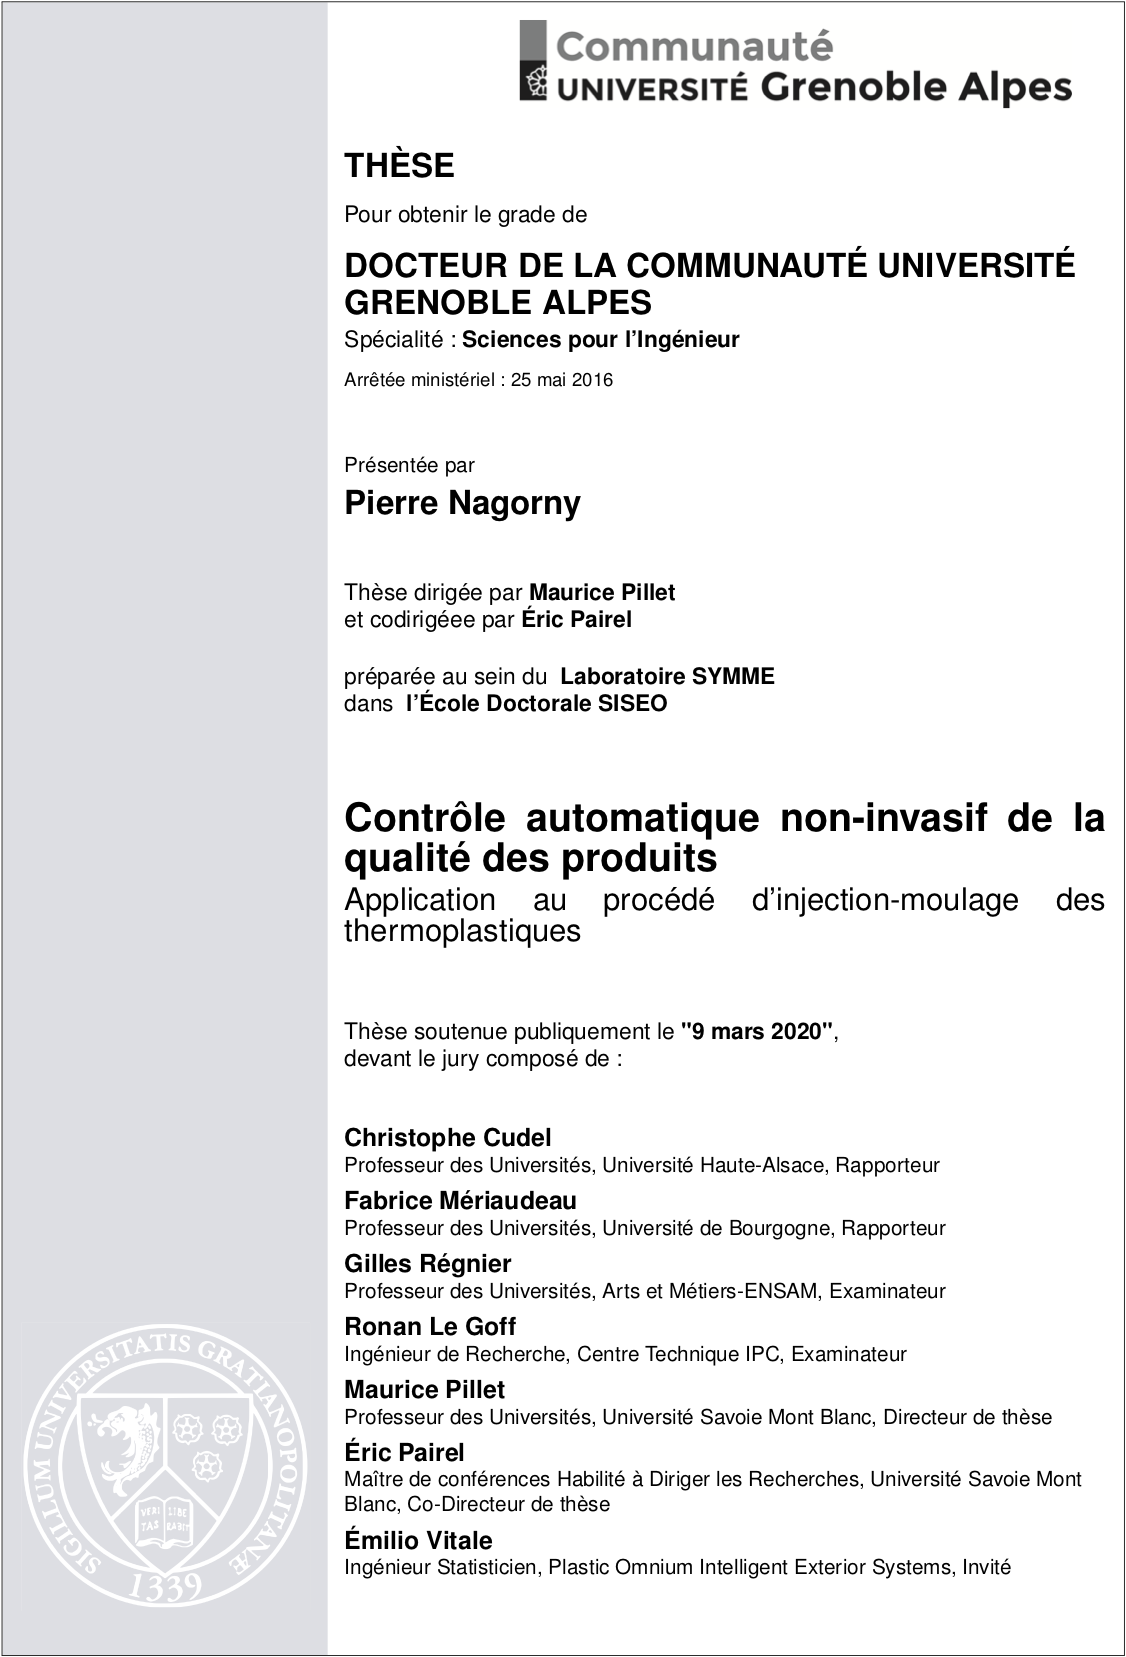 Pierre Nagorny's PhD manuscript cover